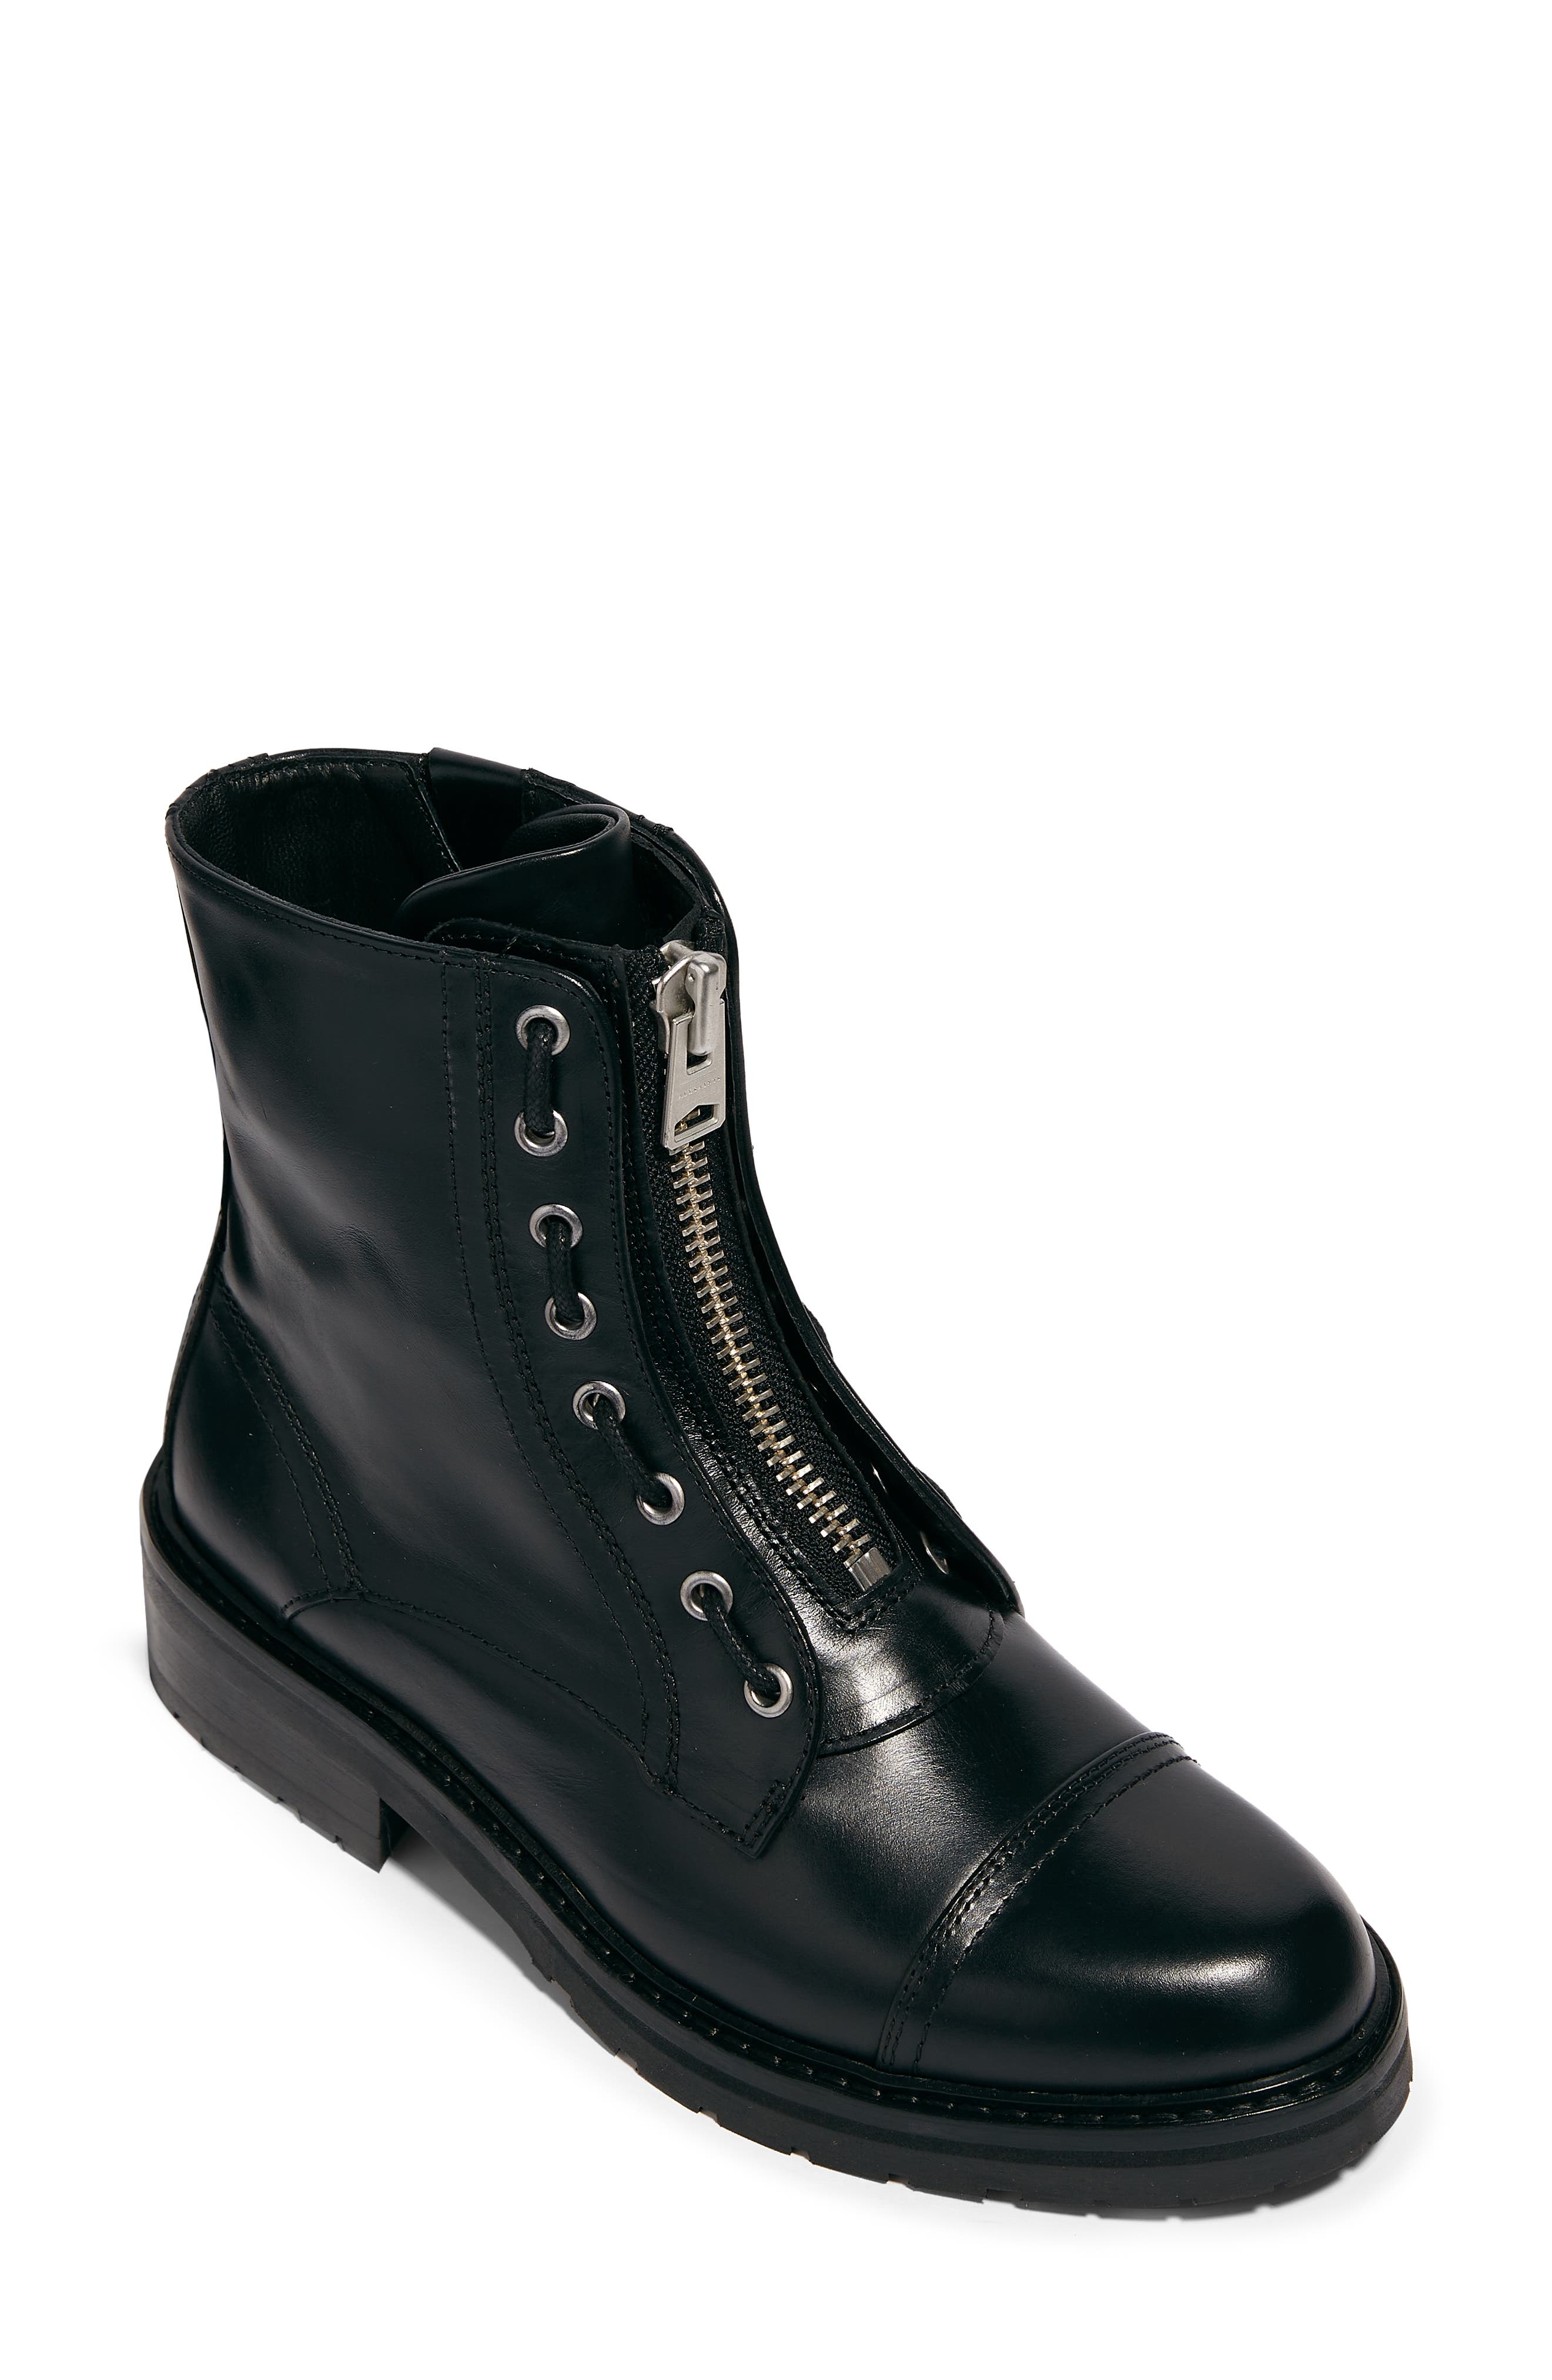 all saints black leather boots